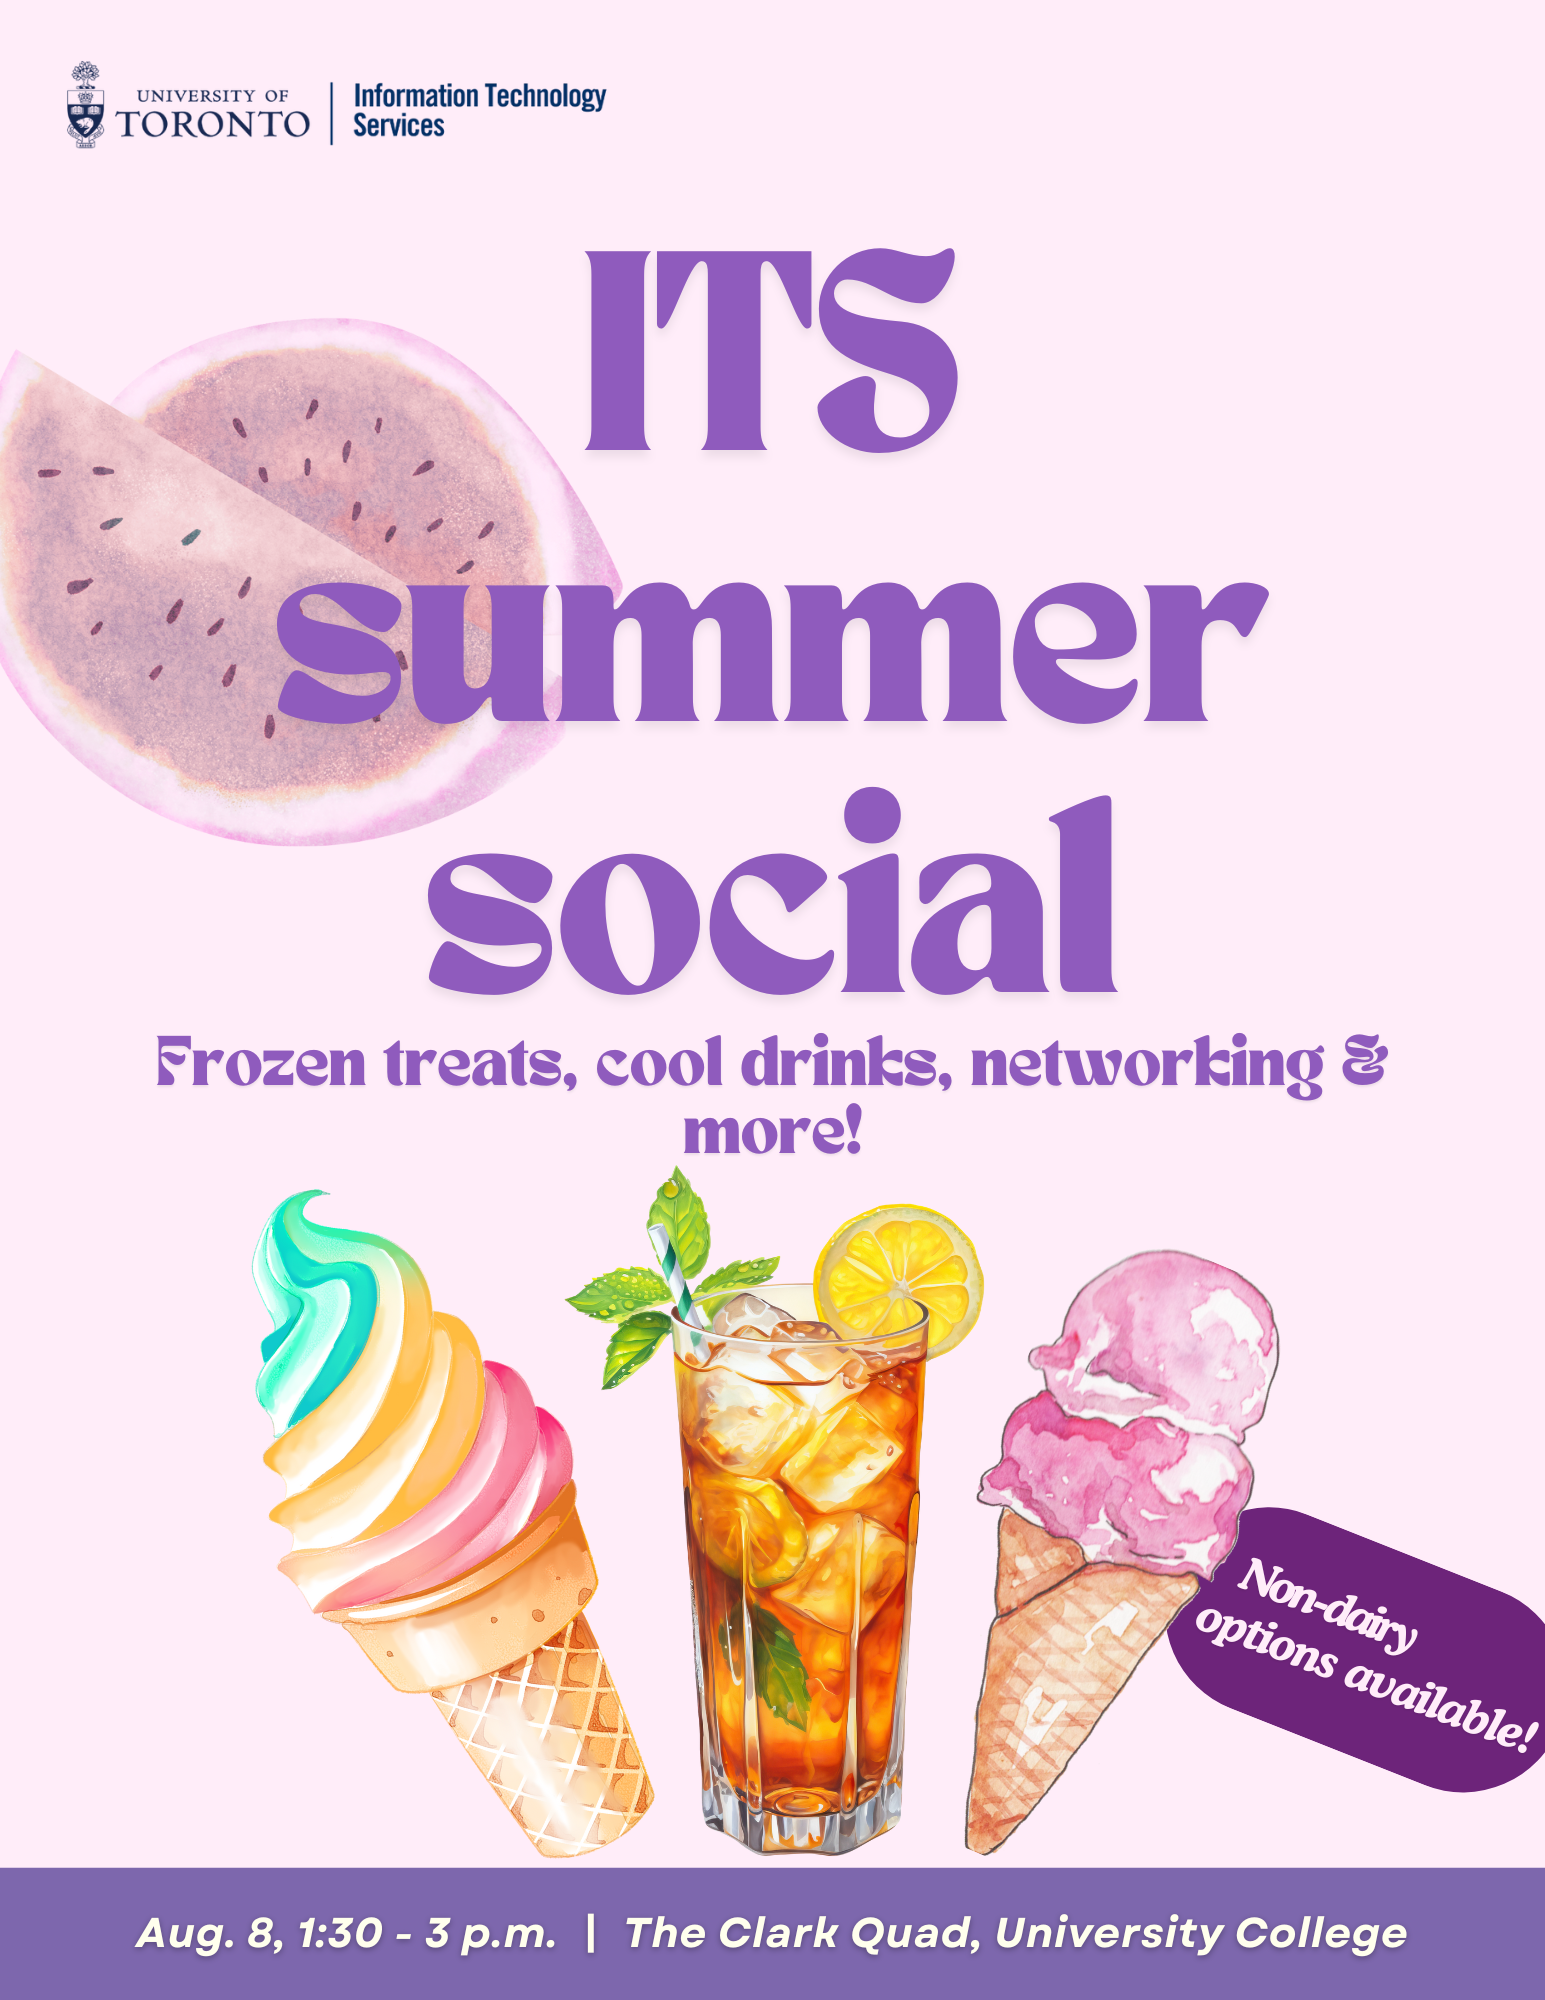 Frozen treats, cool drinks, networking & more!